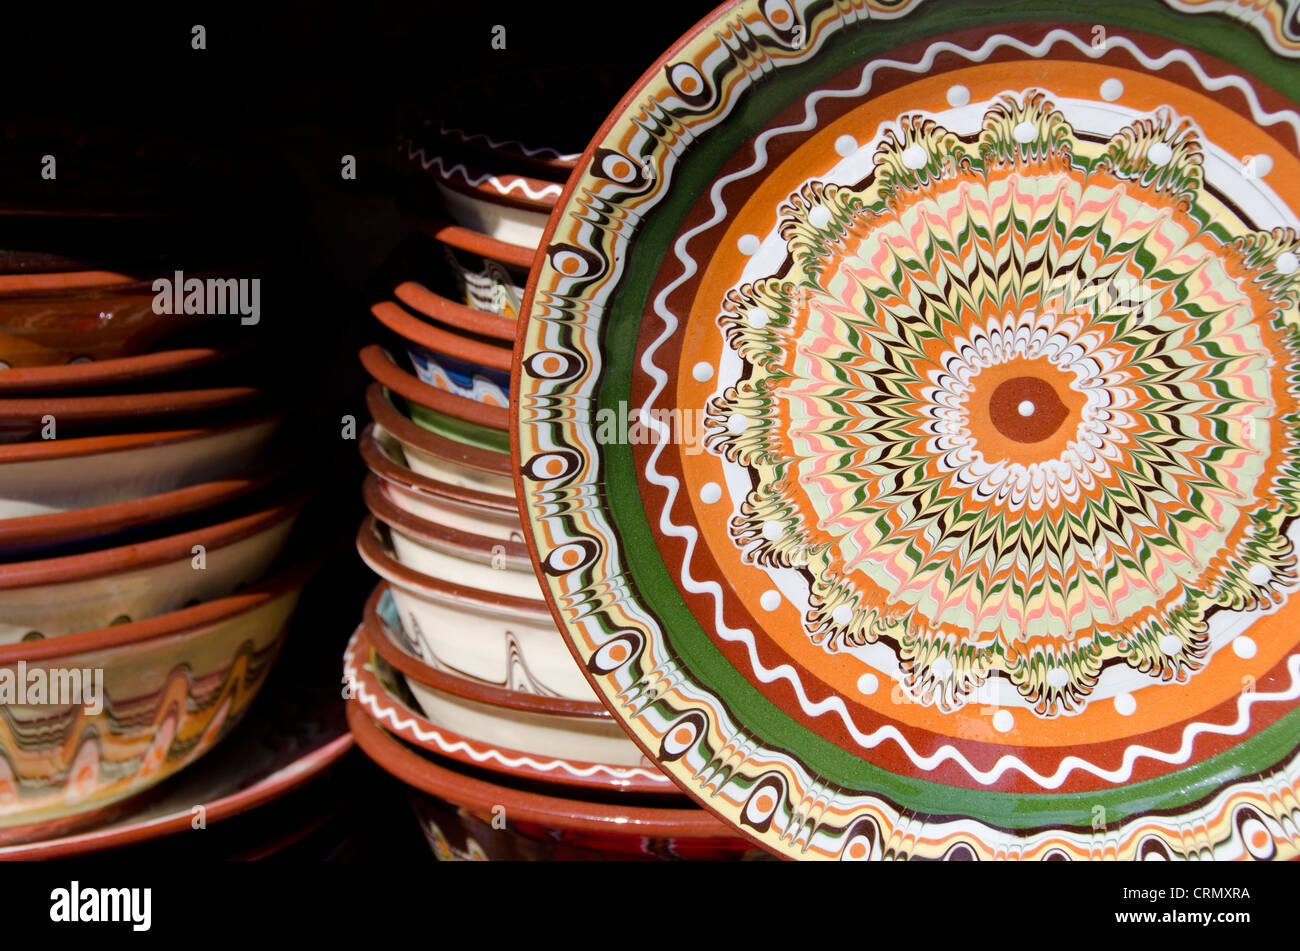 Bulgaria, Nessebur (aka Nessebar or Nesebar). Traditional Bulgarian handicraft pottery with typical colorful pattern. Stock Photo